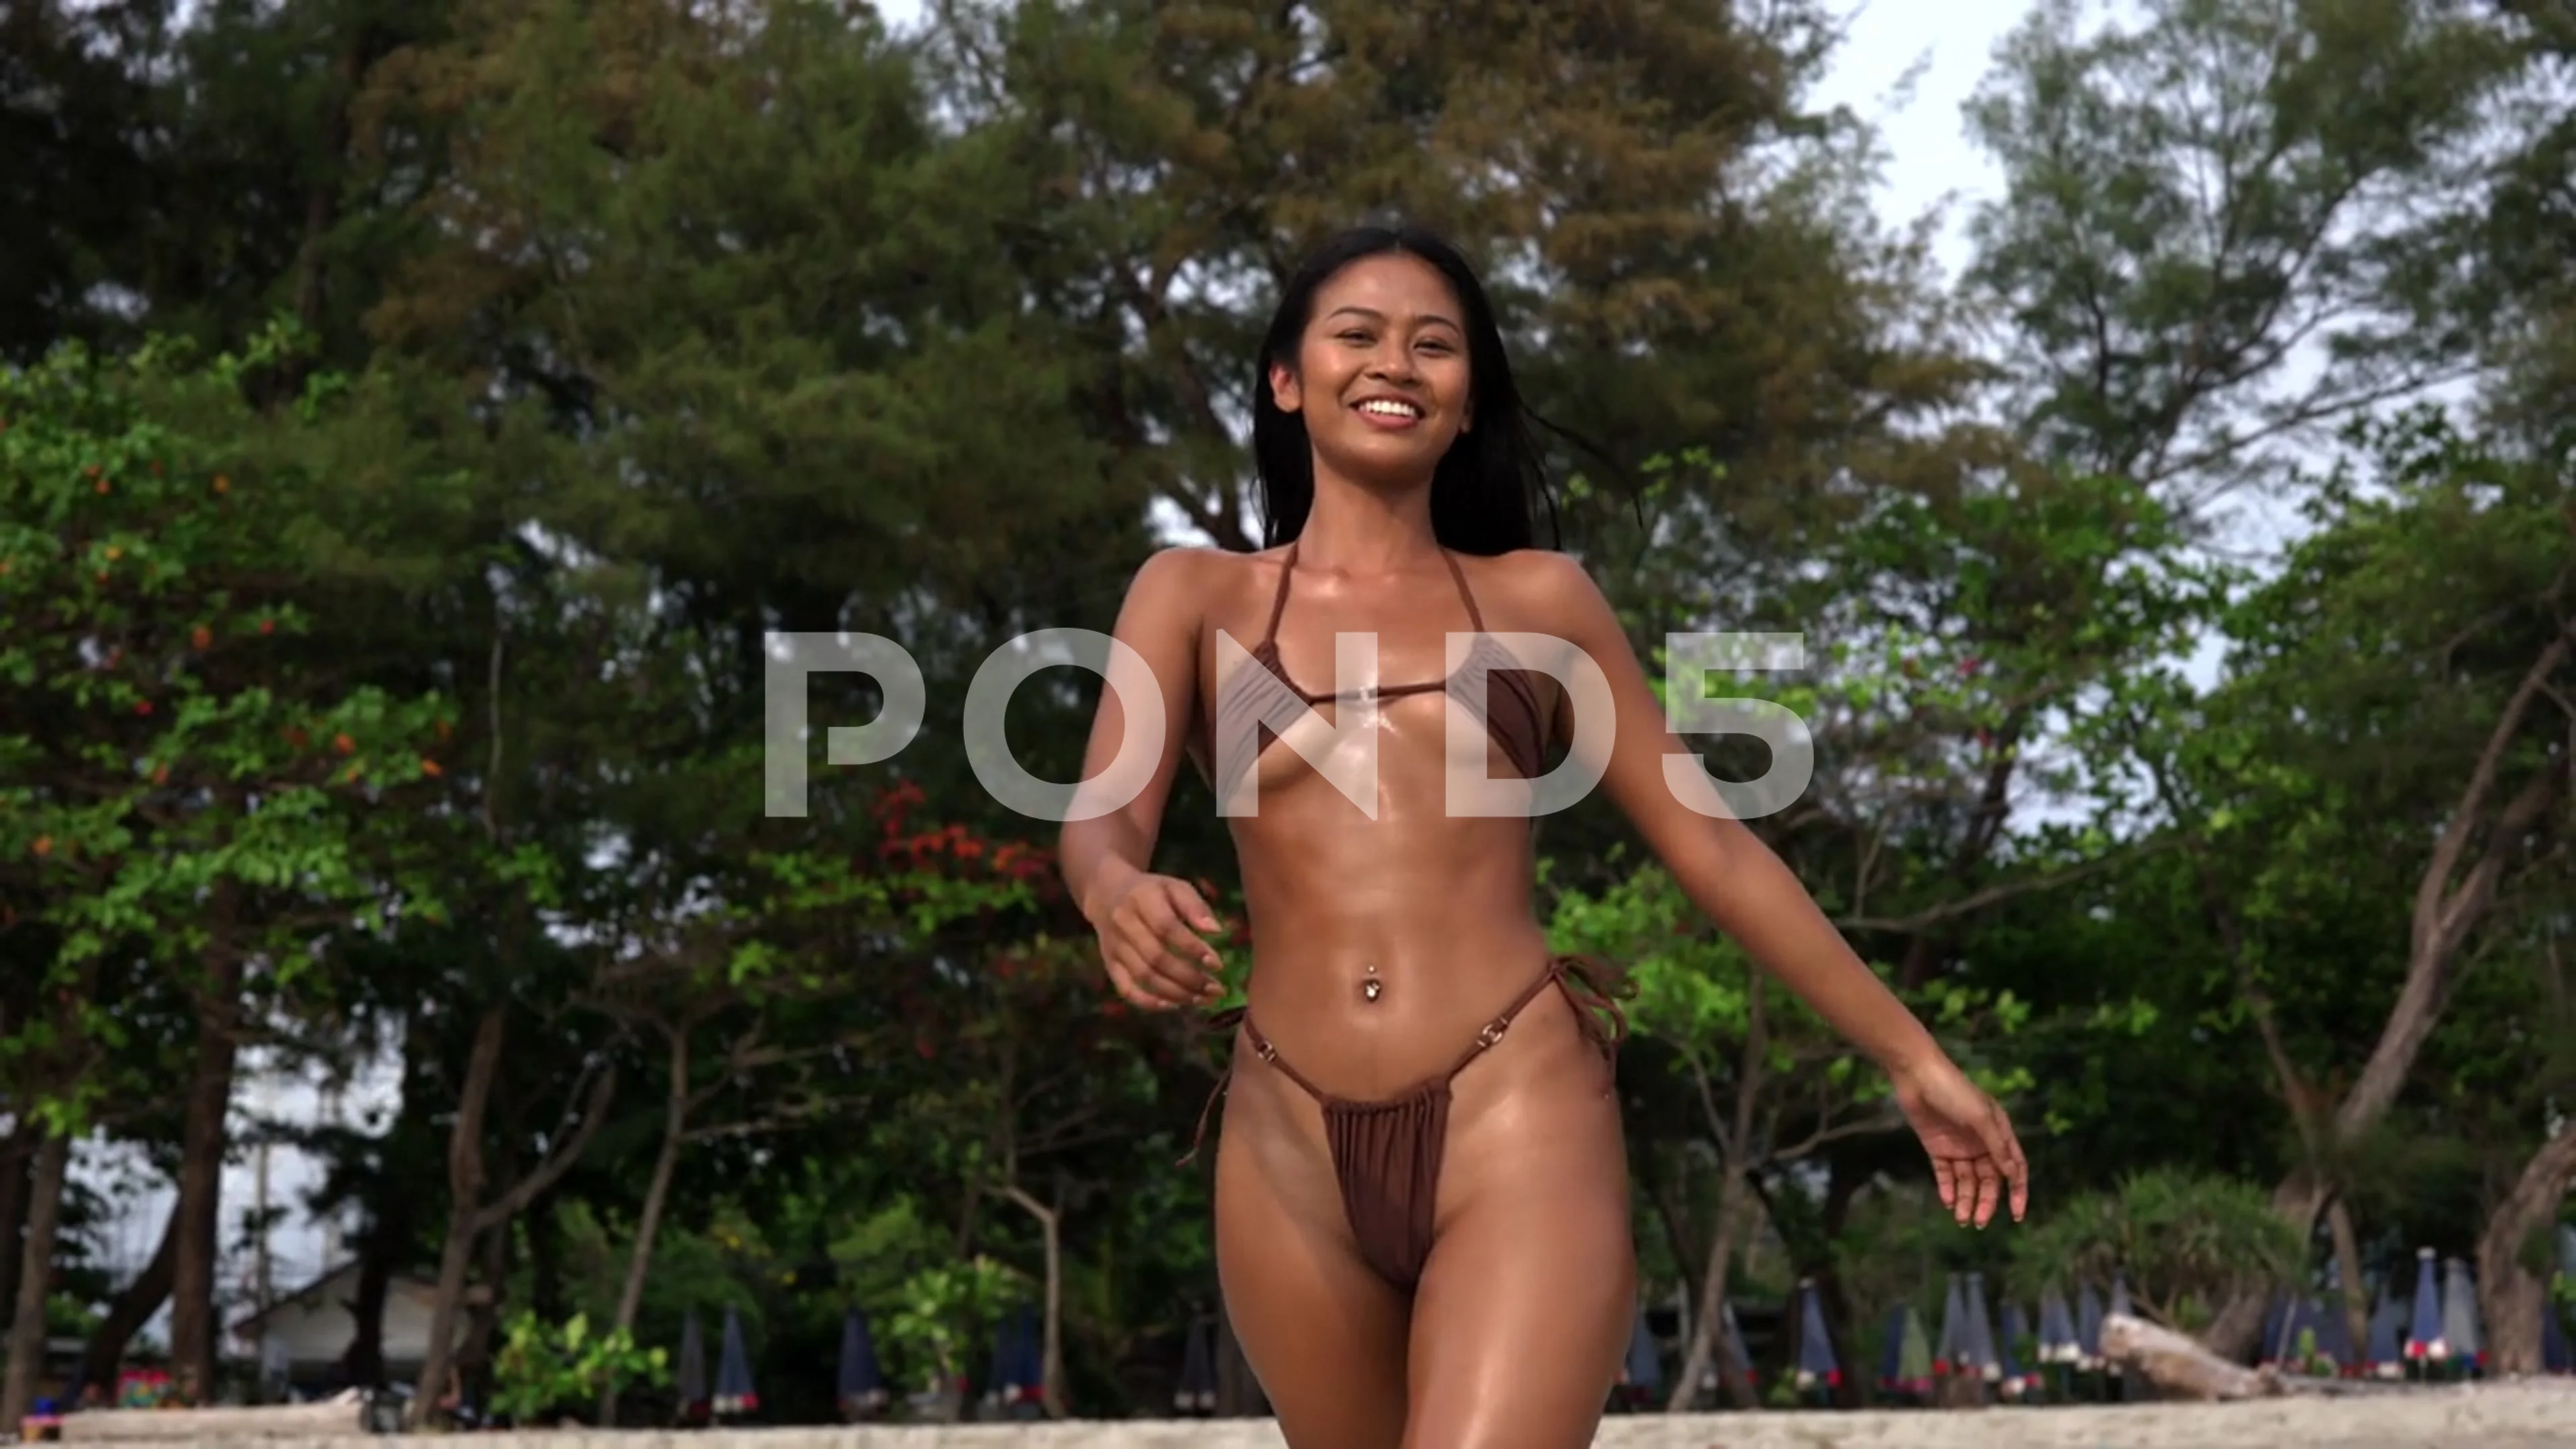 https://images.pond5.com/beautiful-young-woman-tiny-bikini-footage-199132820_prevstill.jpeg